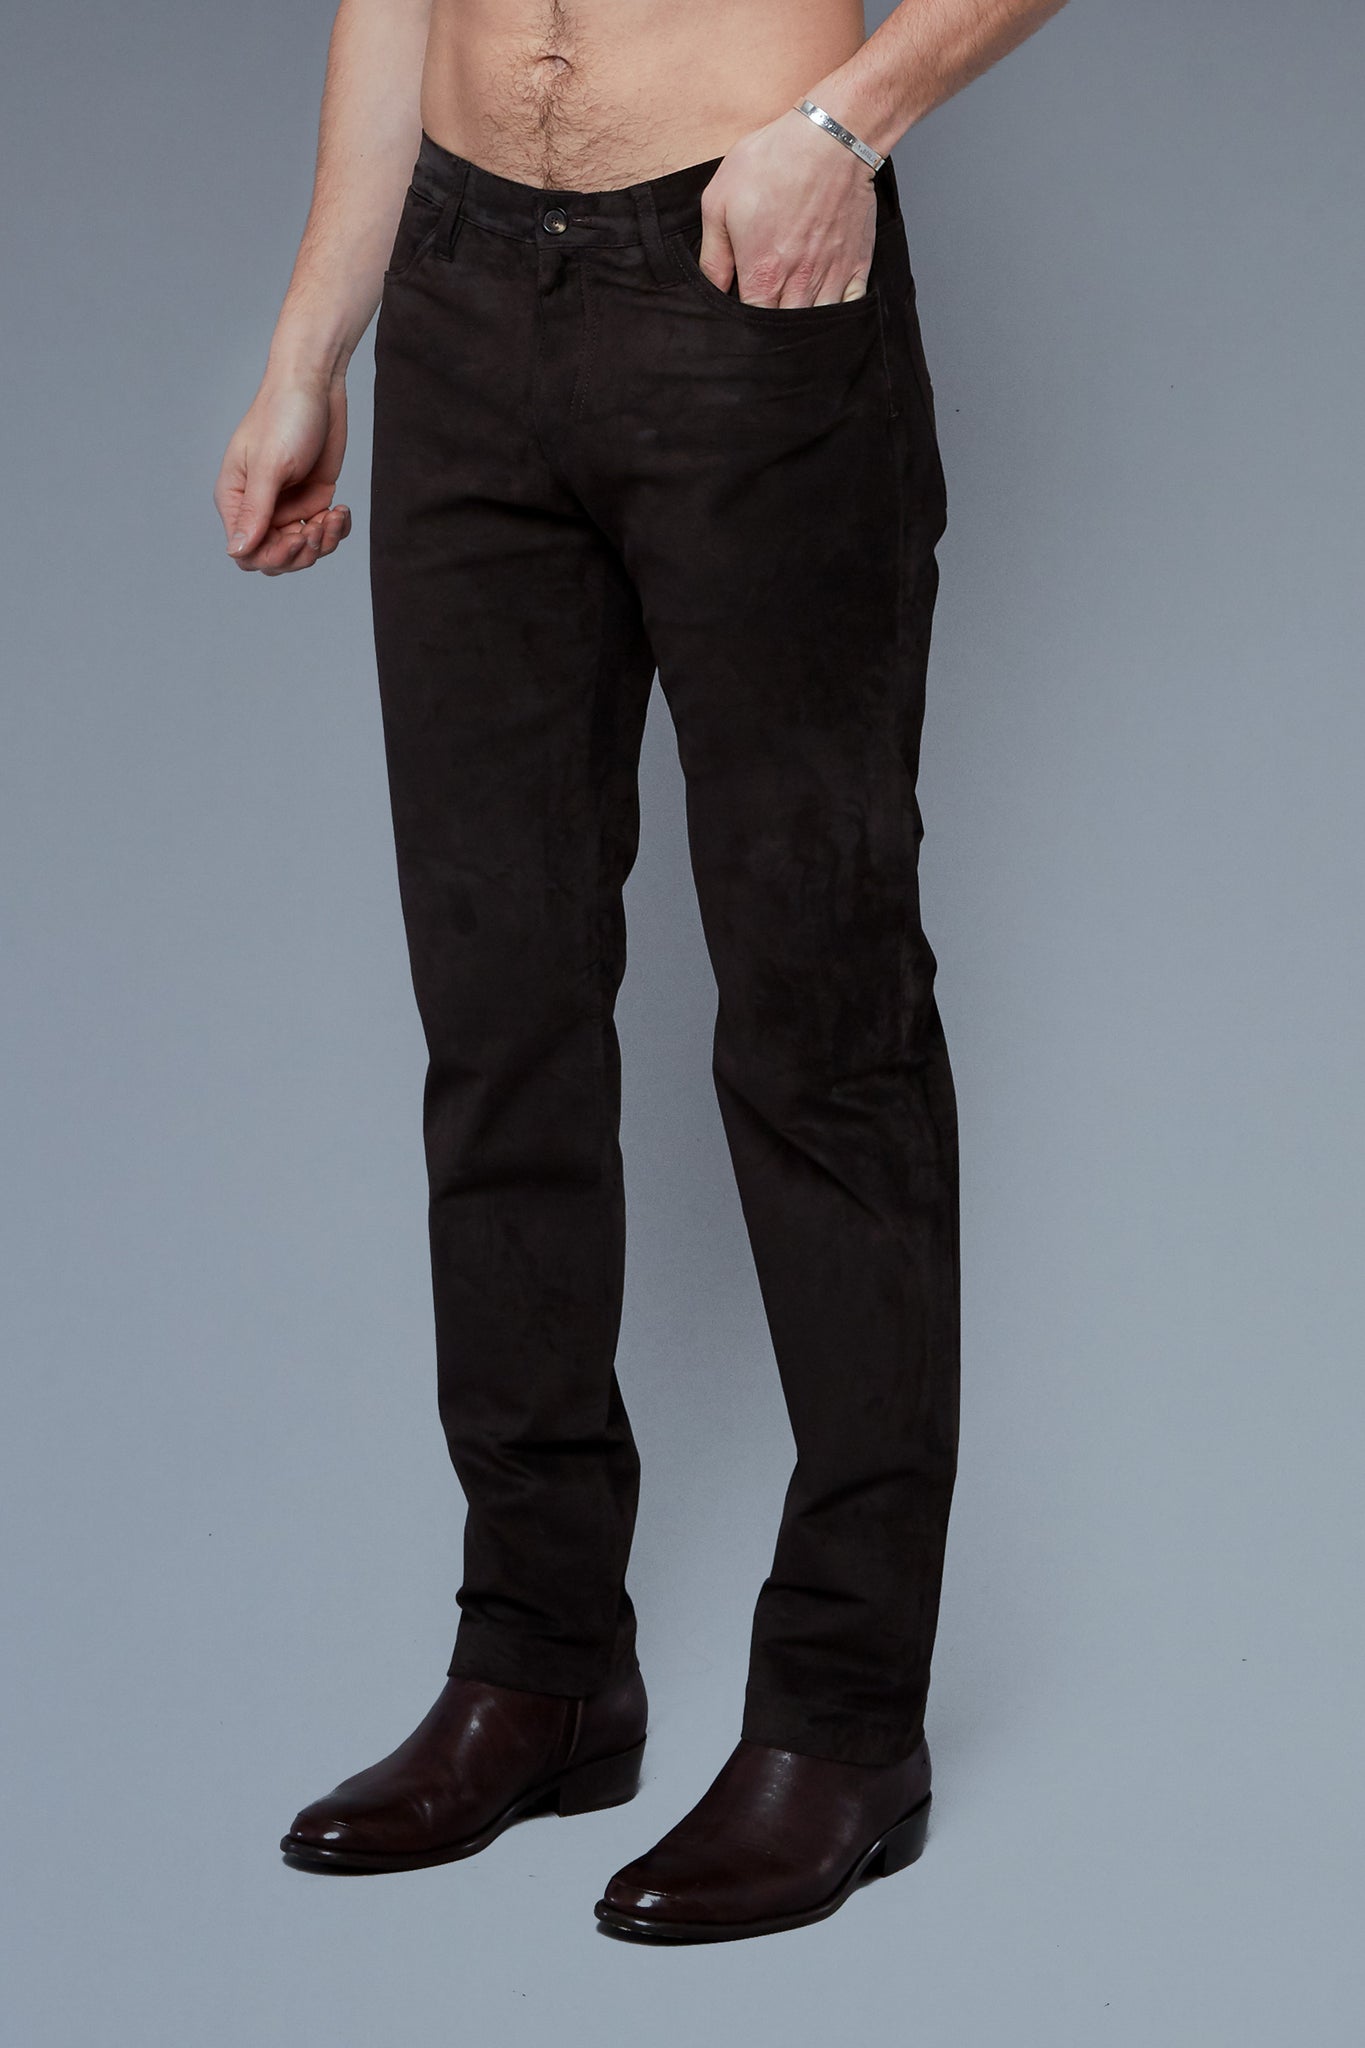 Premium Photo | Short jeans pants isolated